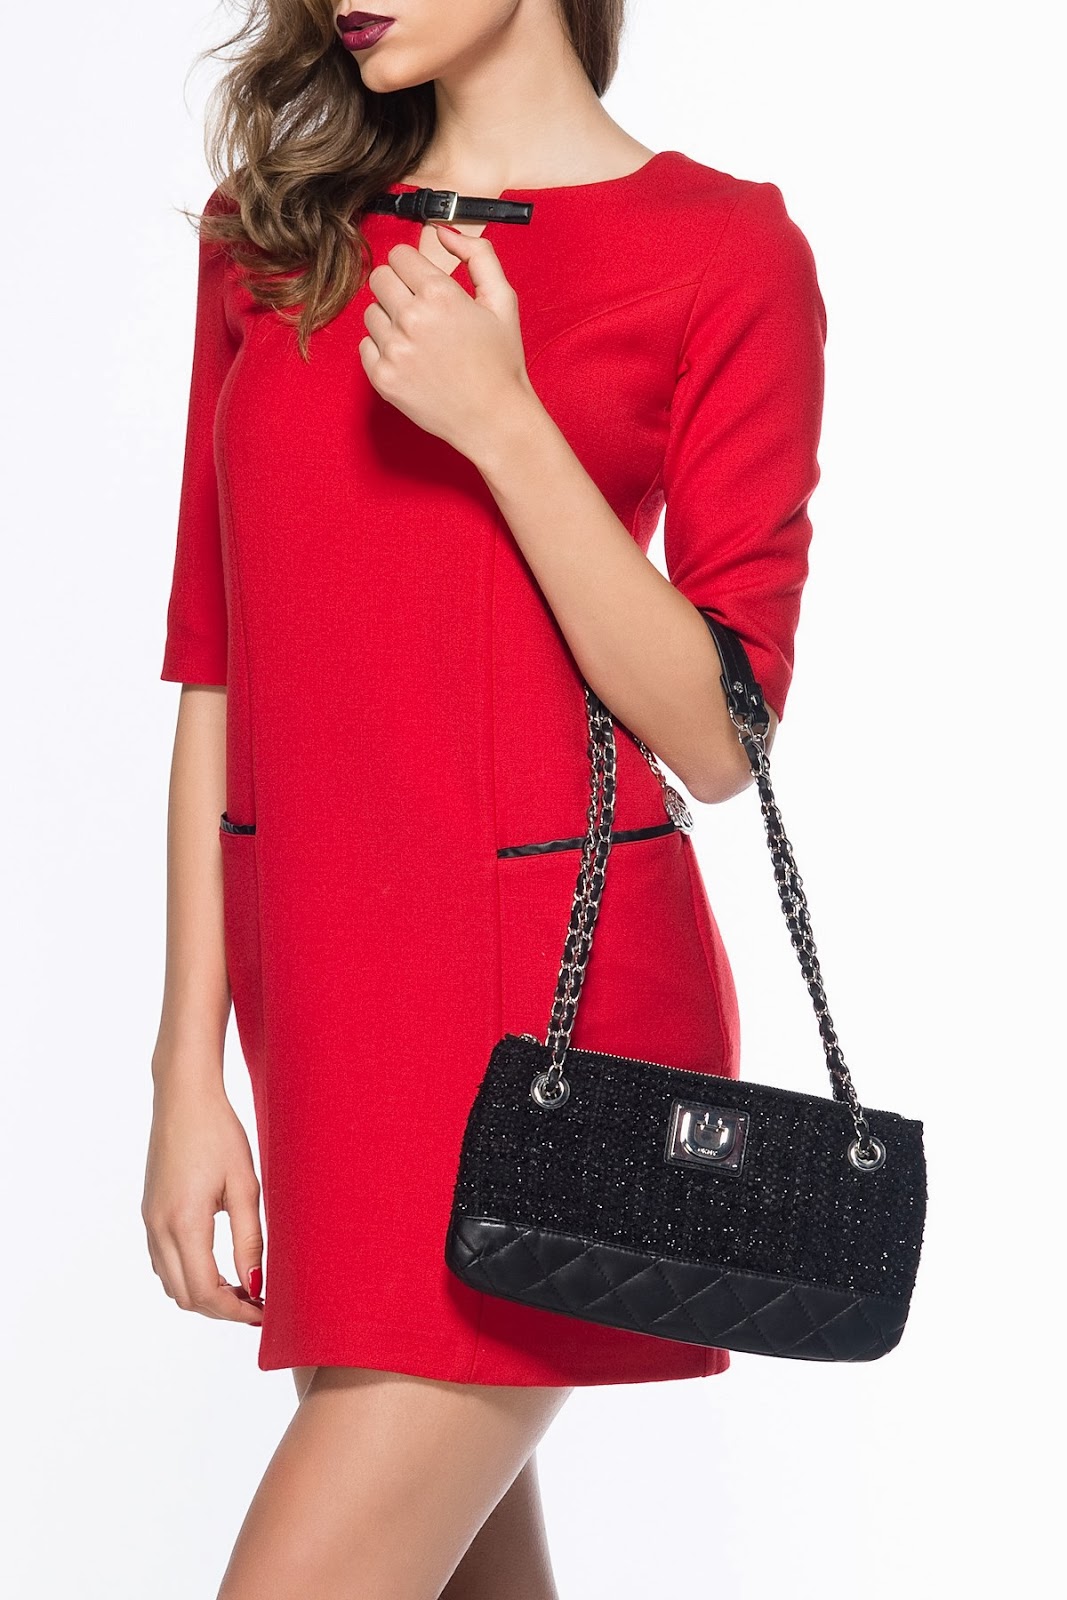 sembrono: DKNY ladies bag models, models 2014 summer ladies handbags